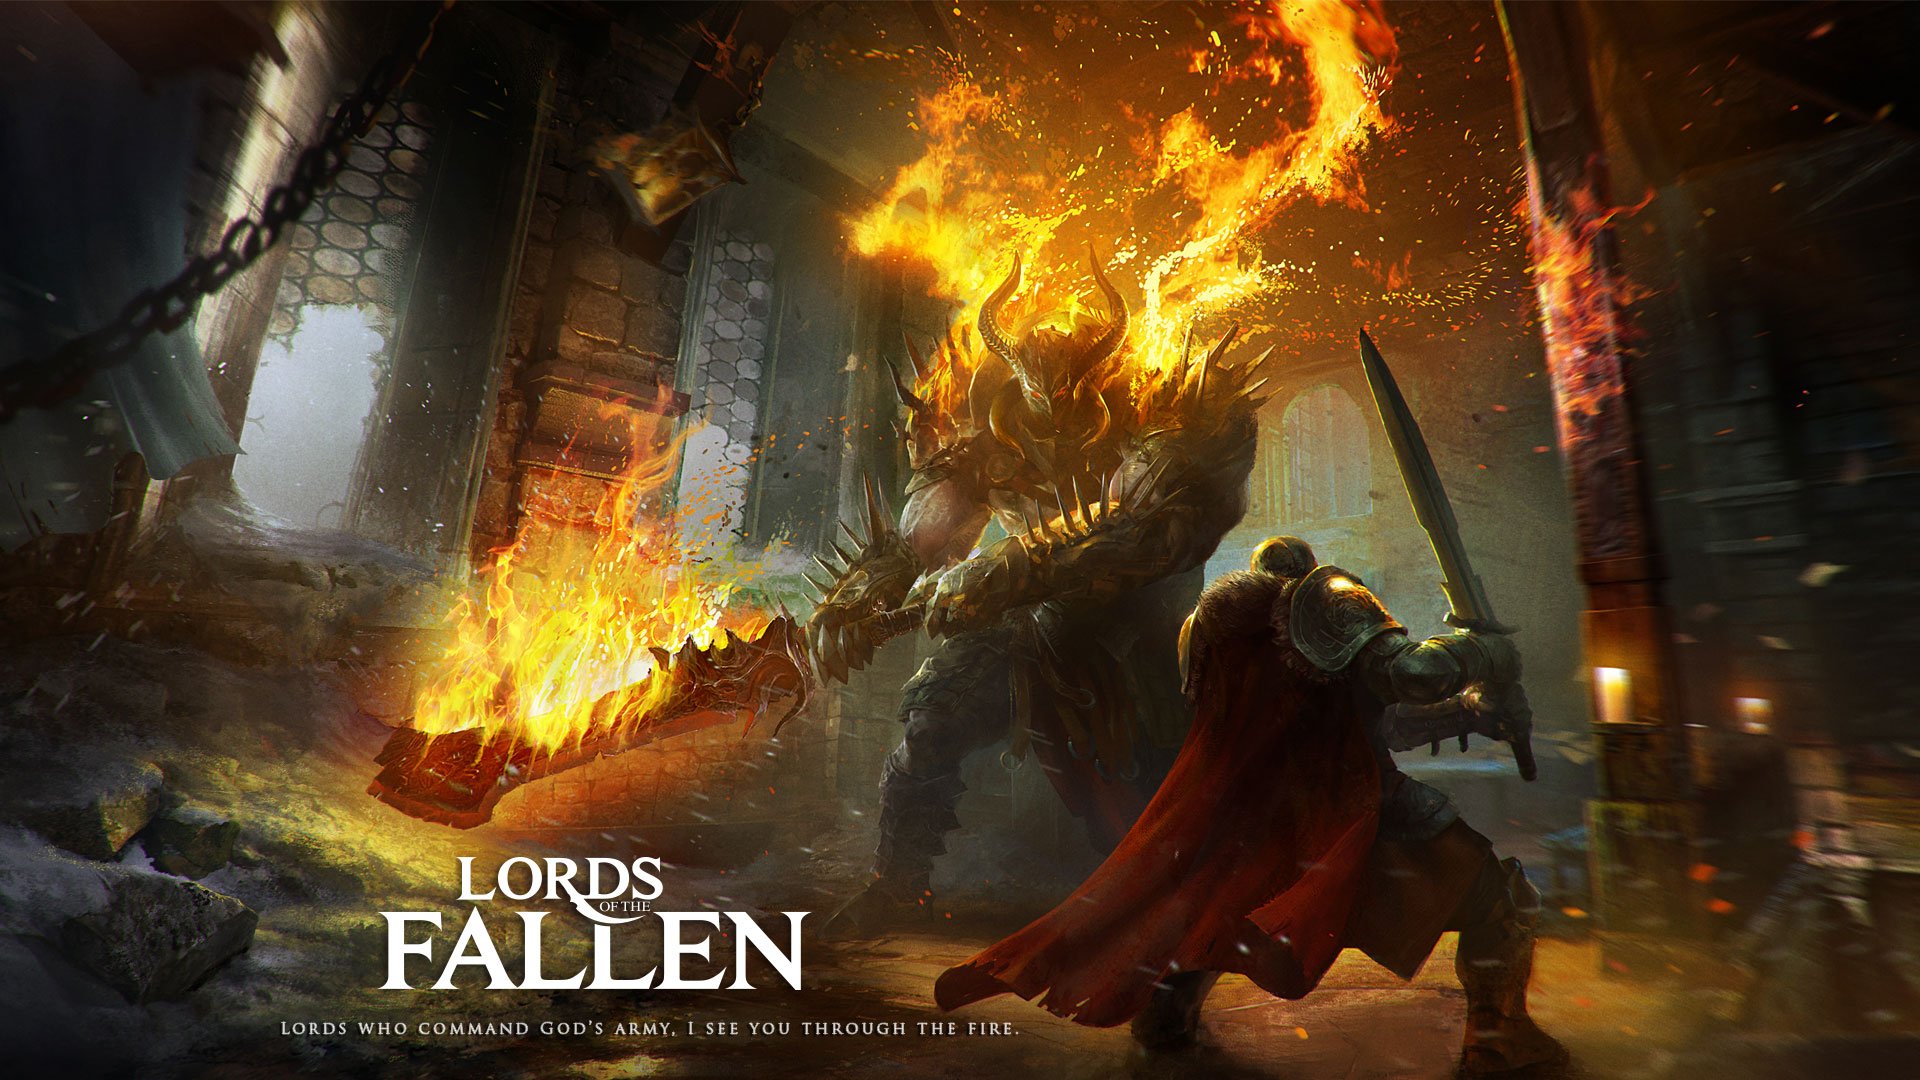 Lords of the Fallen 2 será lançado em 2023 - NerdBunker